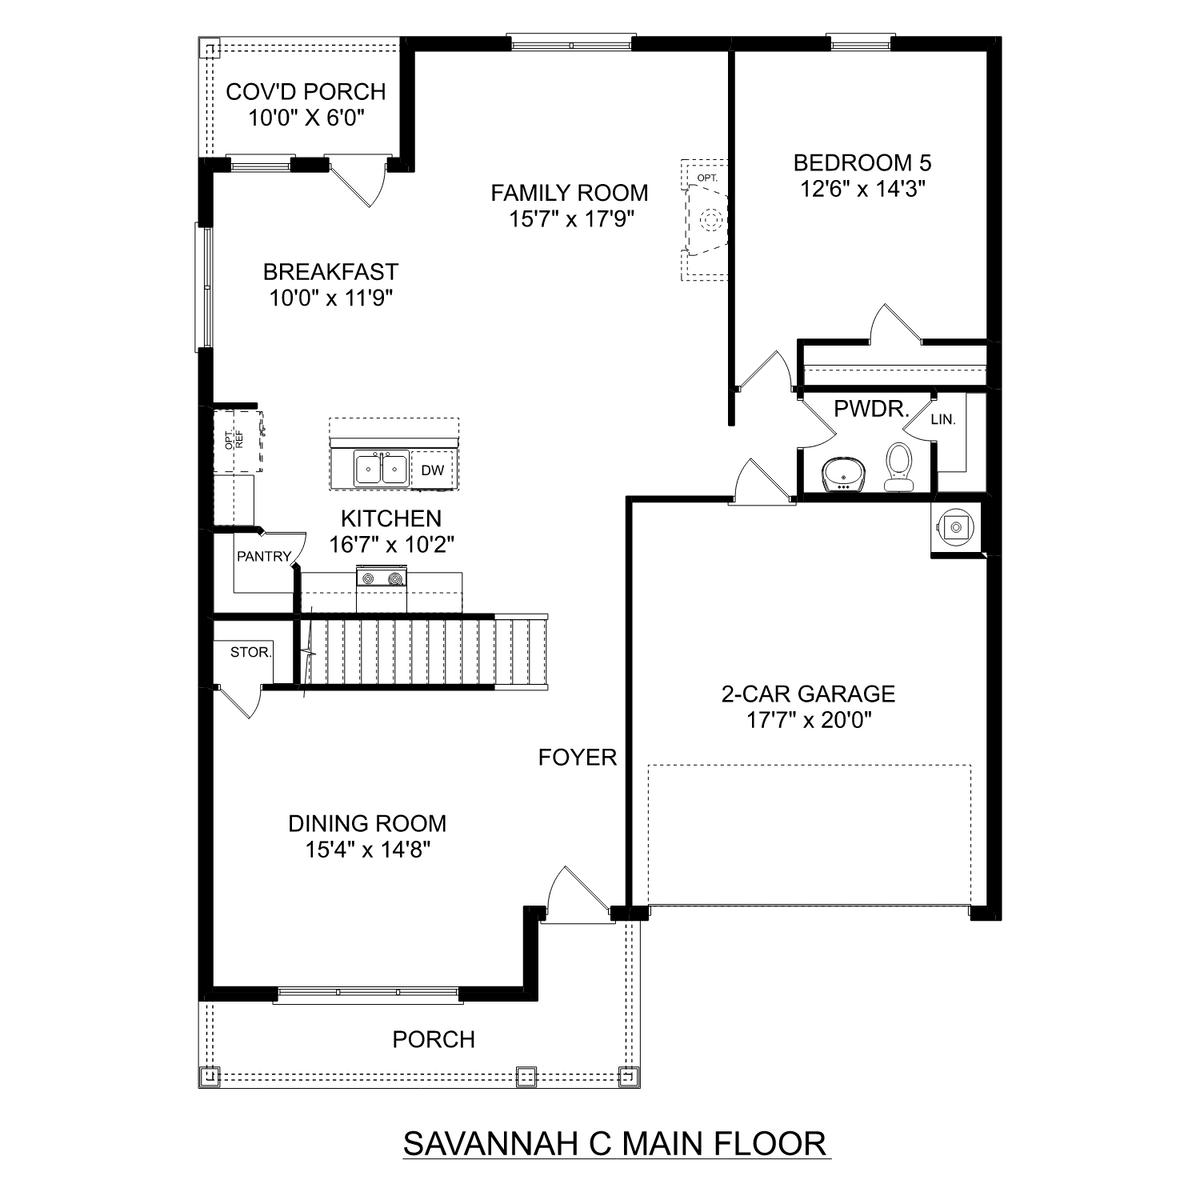 1 - The Savannah C floor plan layout for 127 River Springs Court in Davidson Homes' Flint Meadows community.